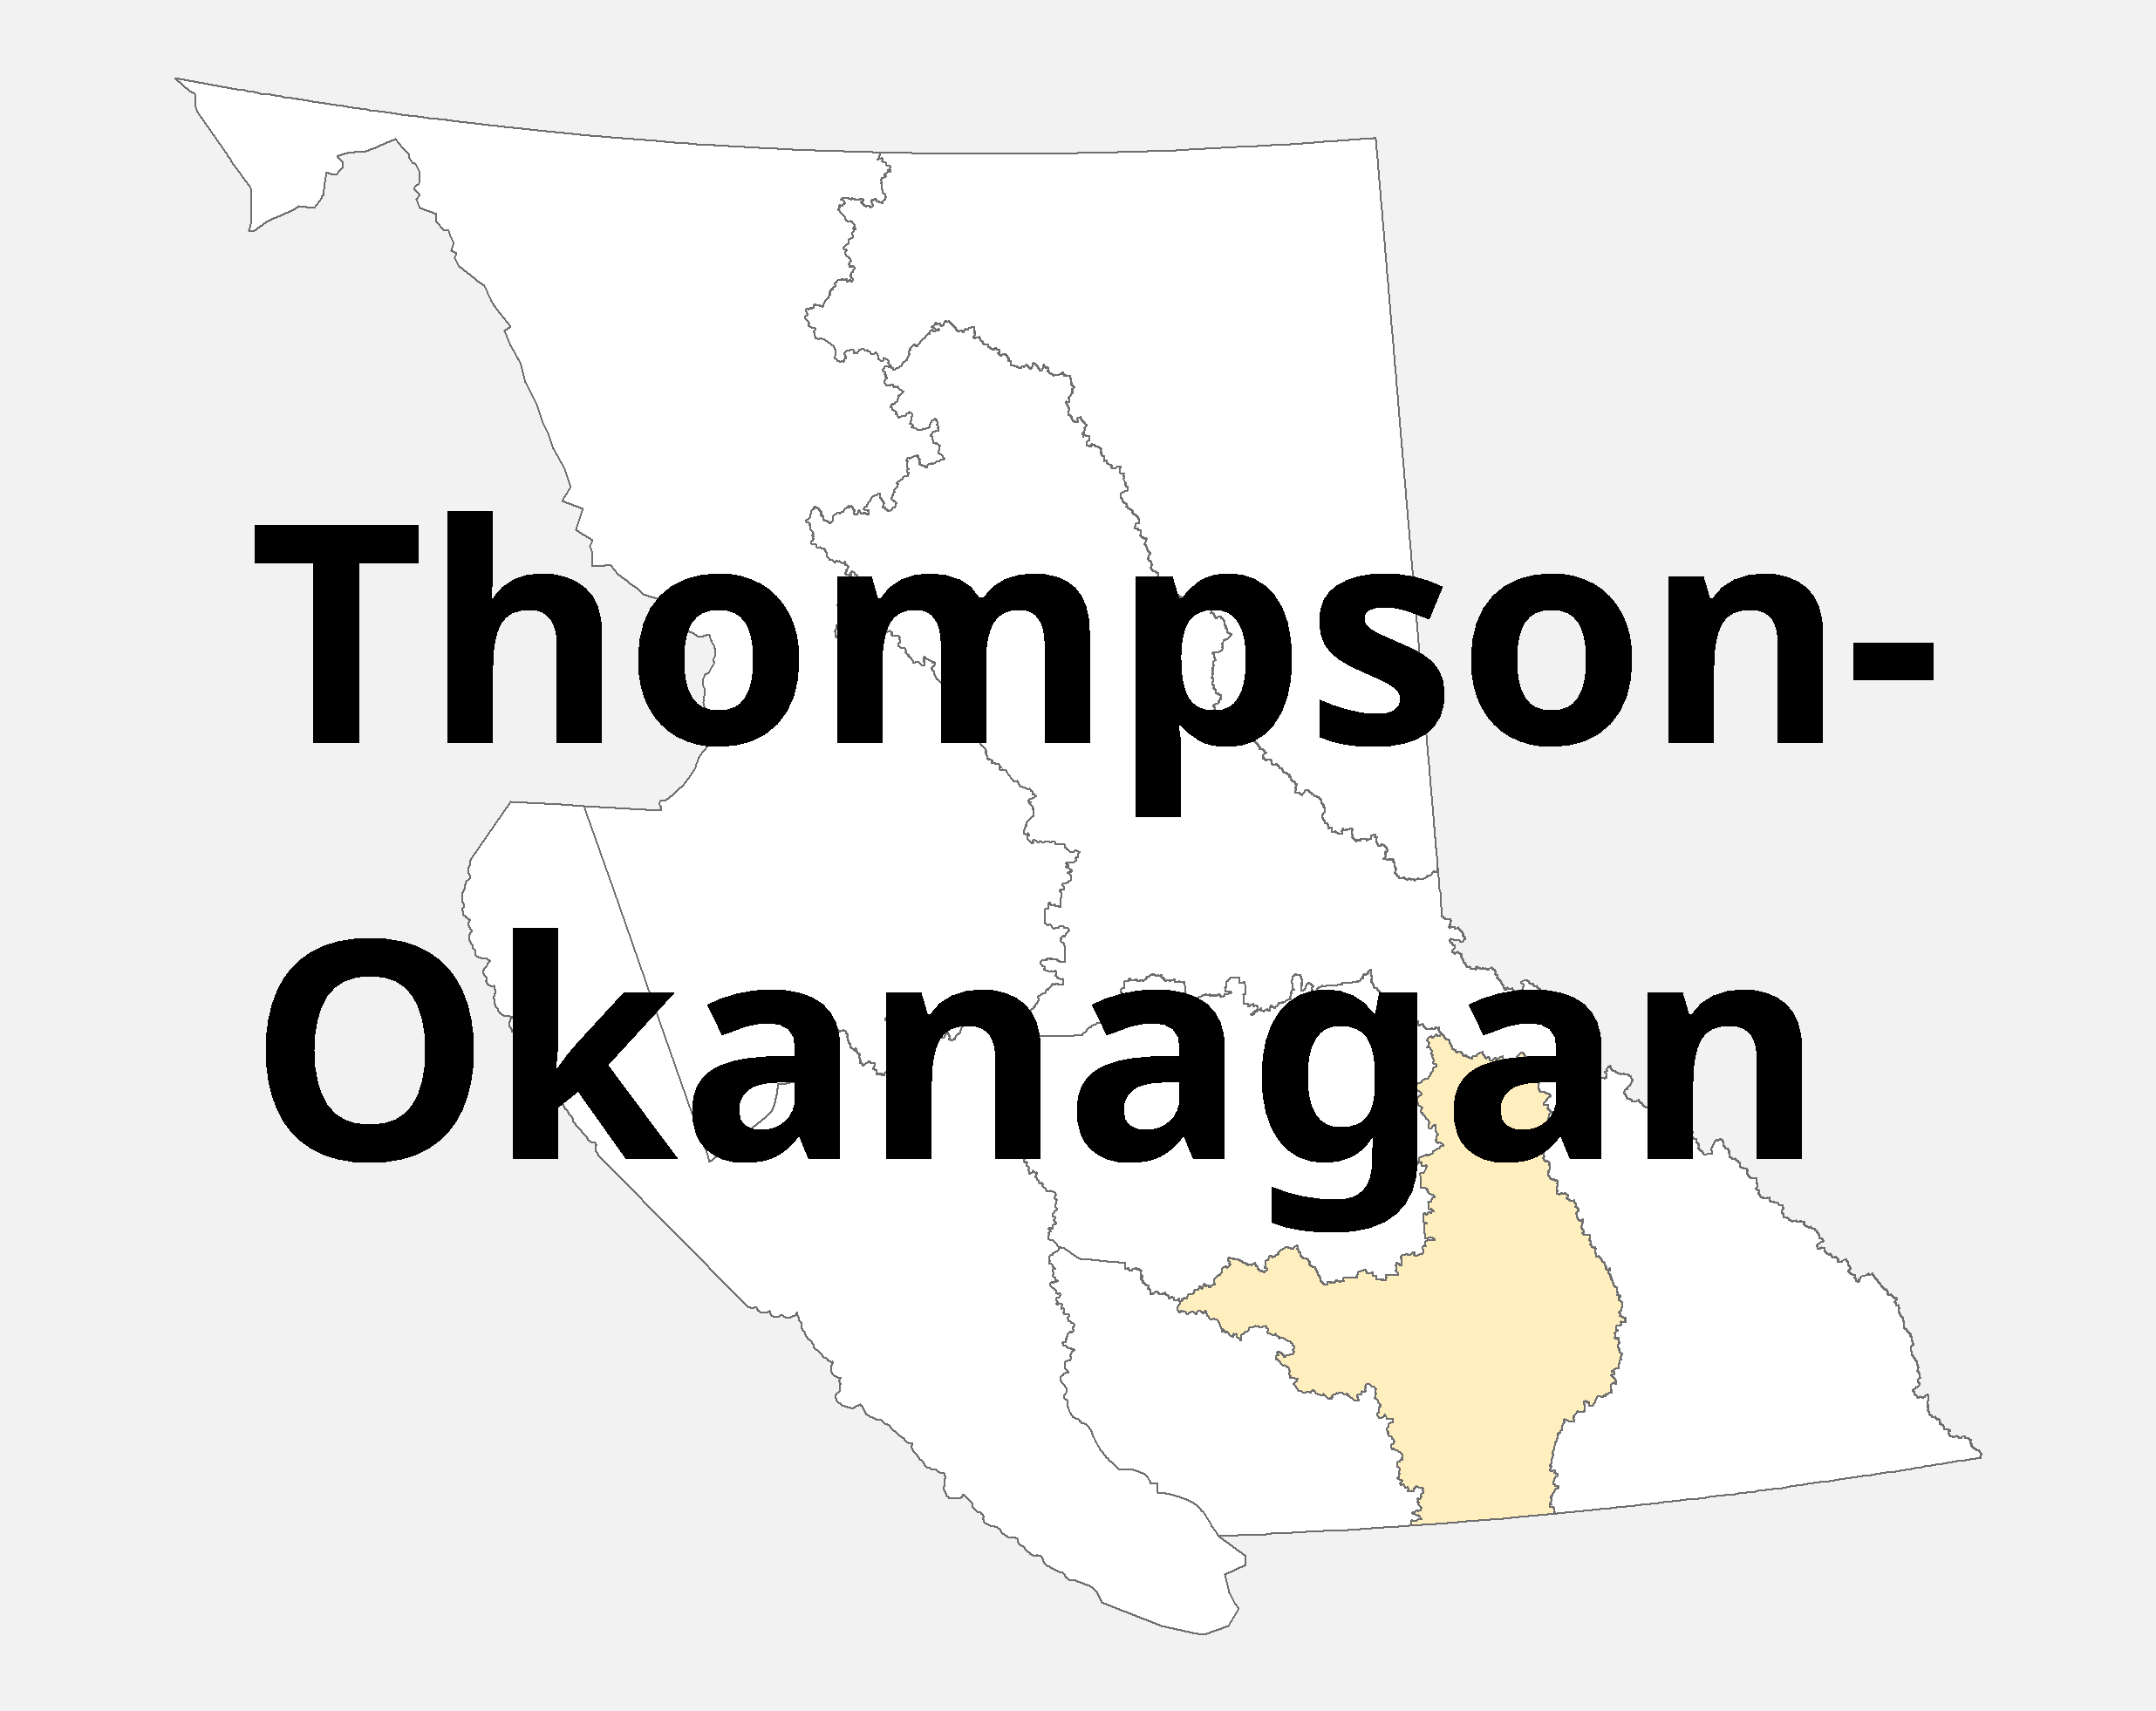 Thompson-Okanagan Natural Resource Region